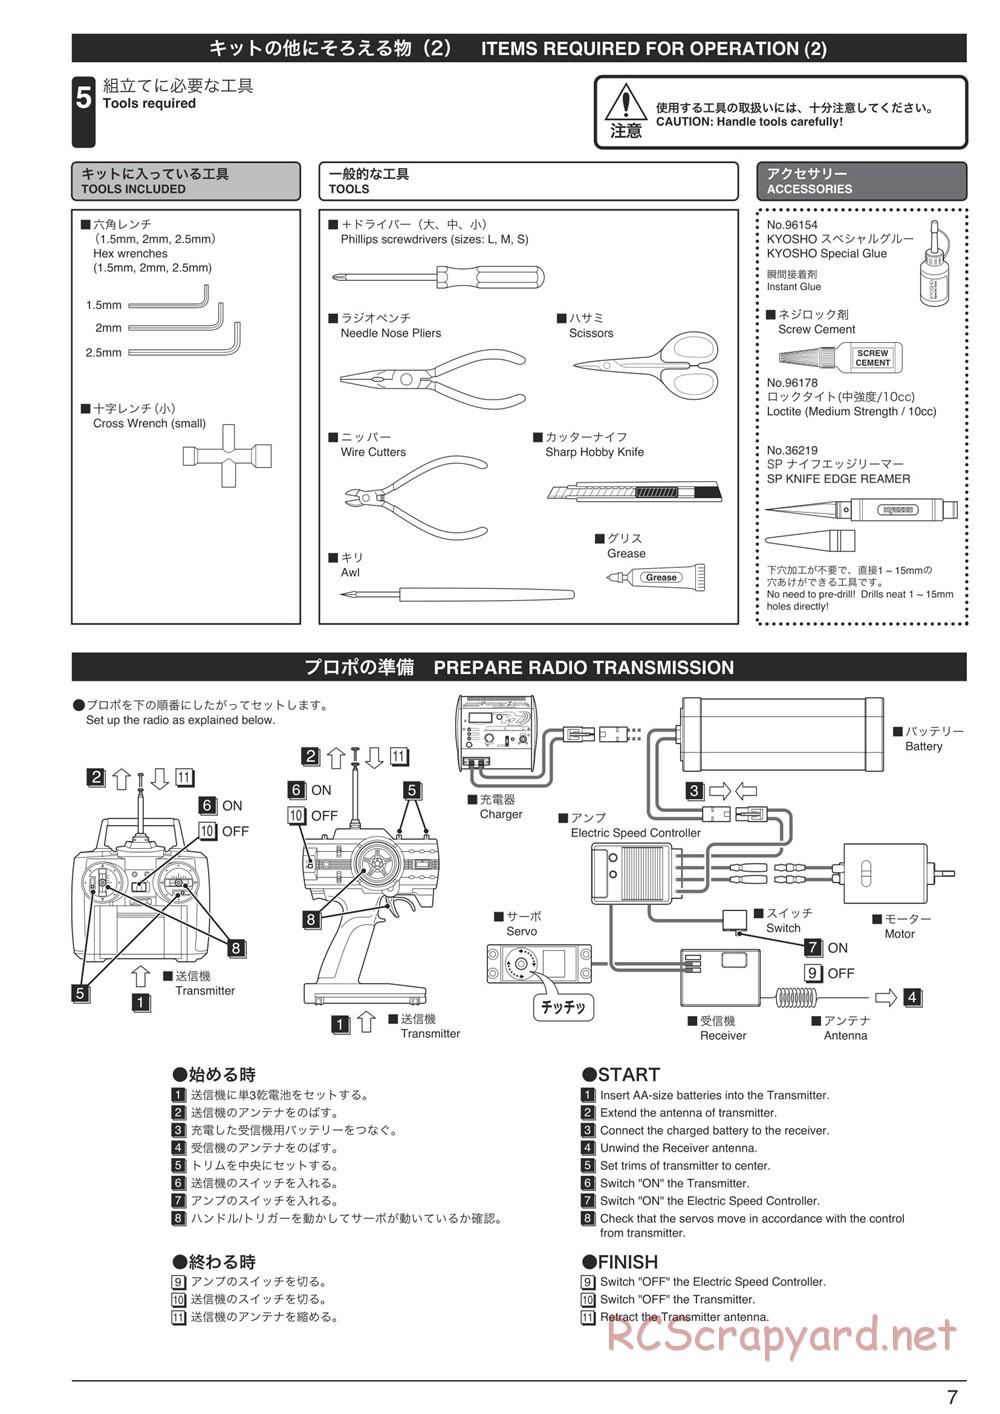 Kyosho - Ultima SCR - Manual - Page 7